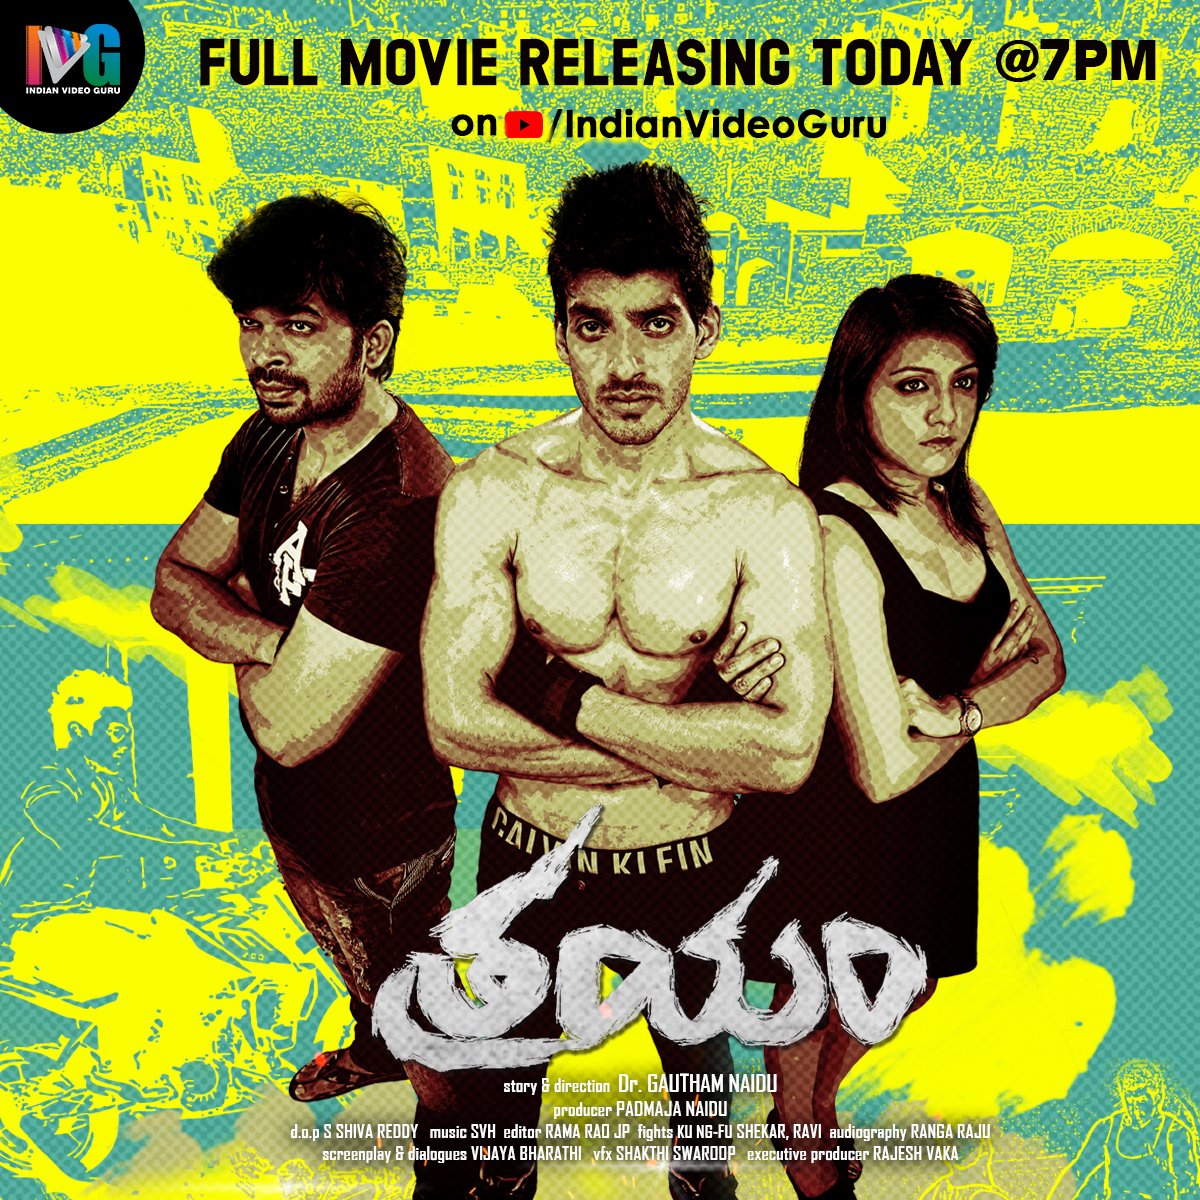 Movie of the day! 🎞️  🎥  🎬 🍿

Watch Action & Drama Entertainer #Trayam Full Movie Releasing Today at 7PM on #IndianVideoGuru 

Directed by 🎥 🎬   #GowthamNaidu 

Starring #VishuReddy, #Abhiram, #PriyalGor &  #Sanjana